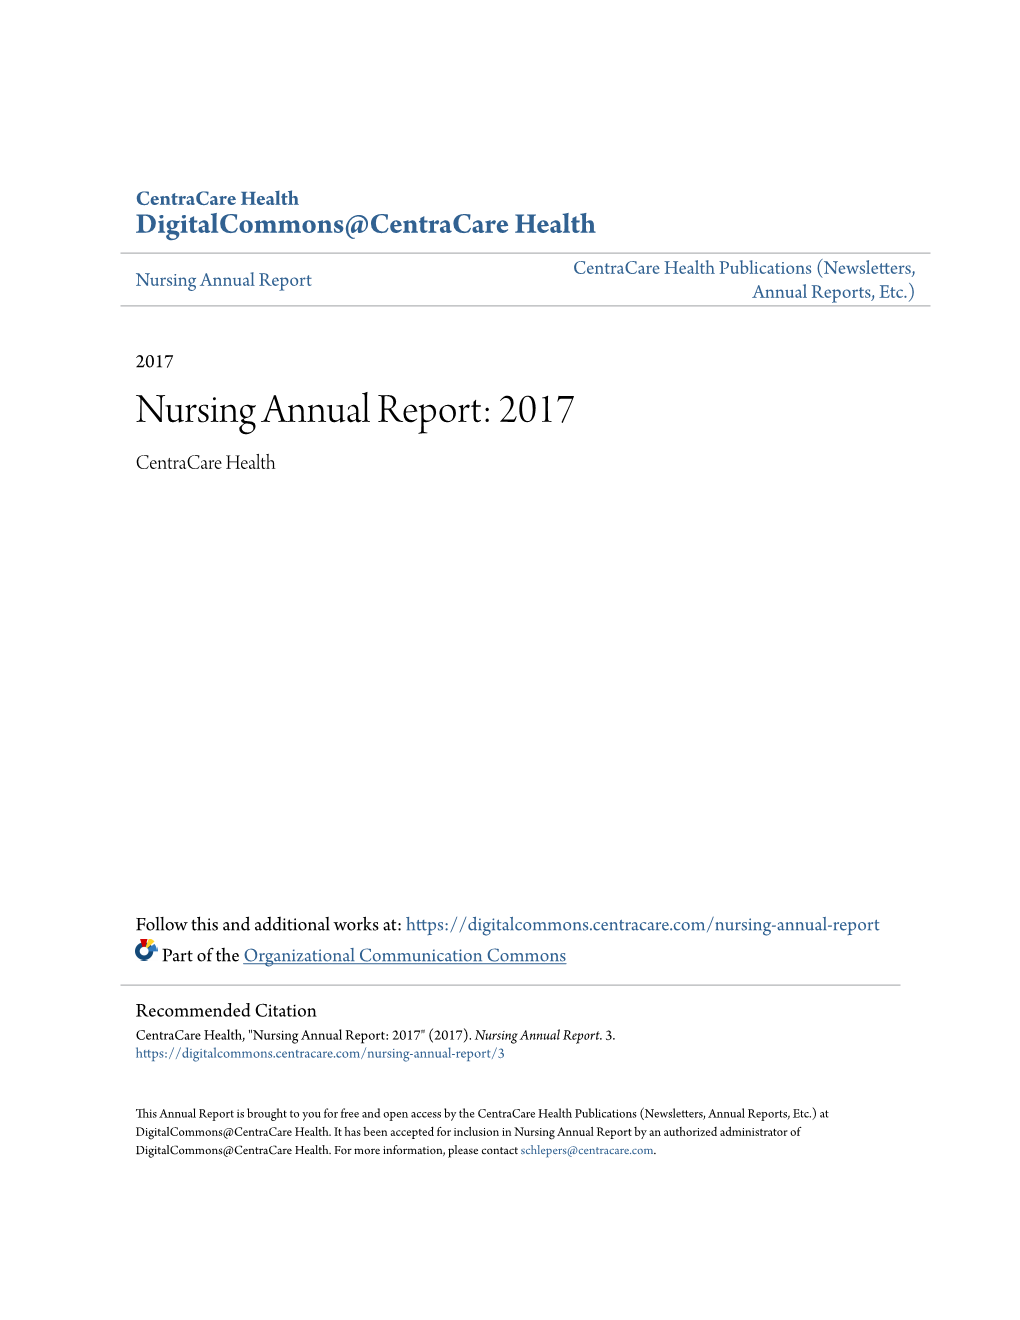 Nursing Annual Report: 2017 Centracare Health